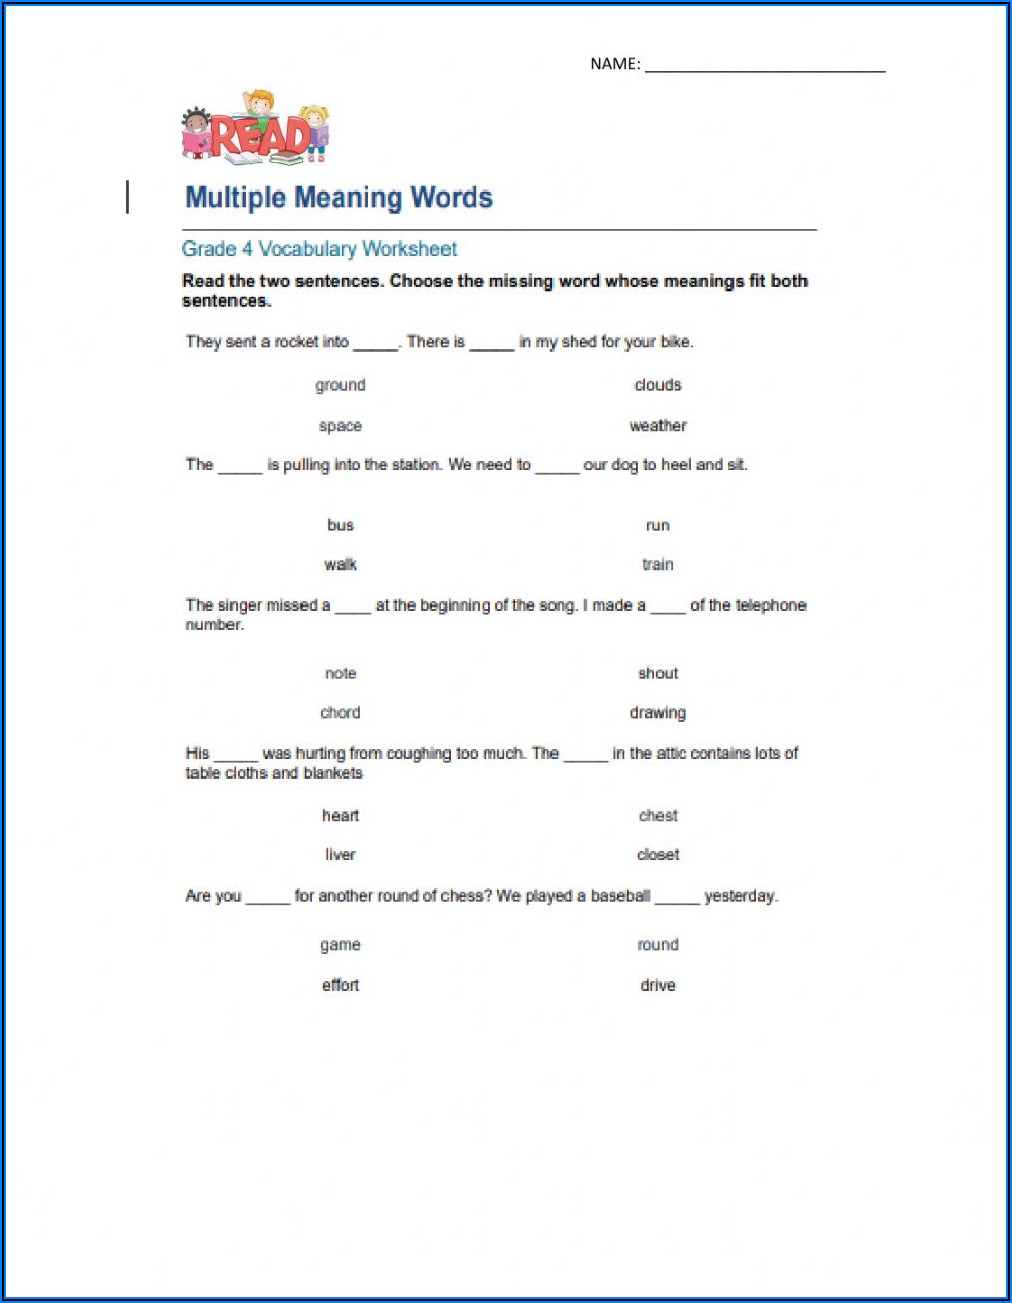 Words With Multiple Meanings Worksheet Grade 4 Pdf